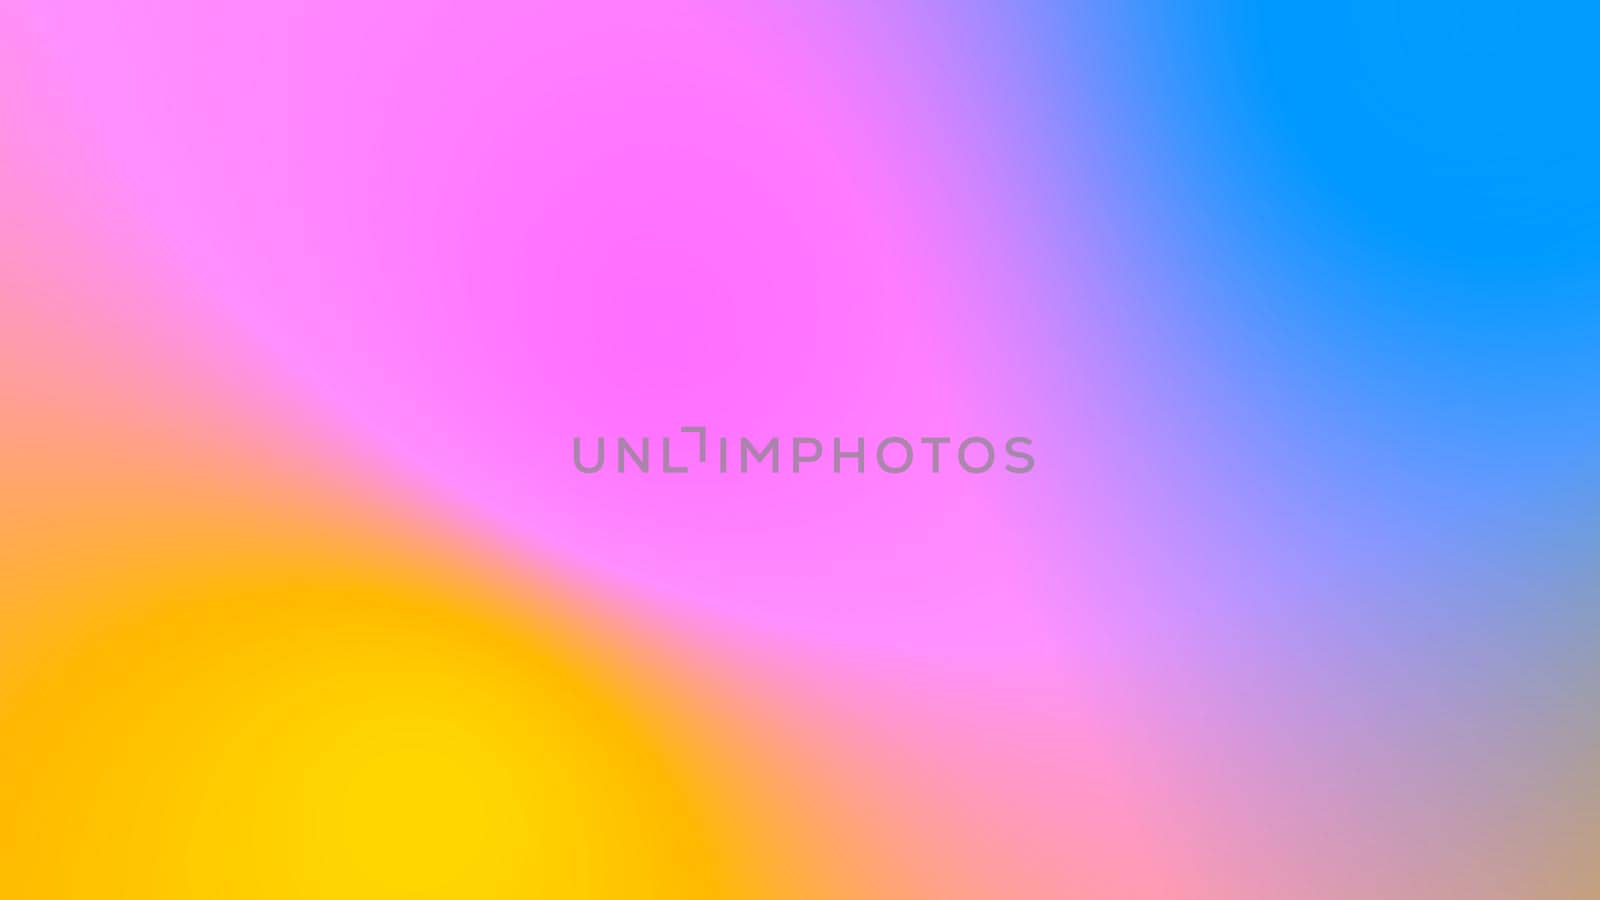 Bright color of blue, pink, orange gradient transition background